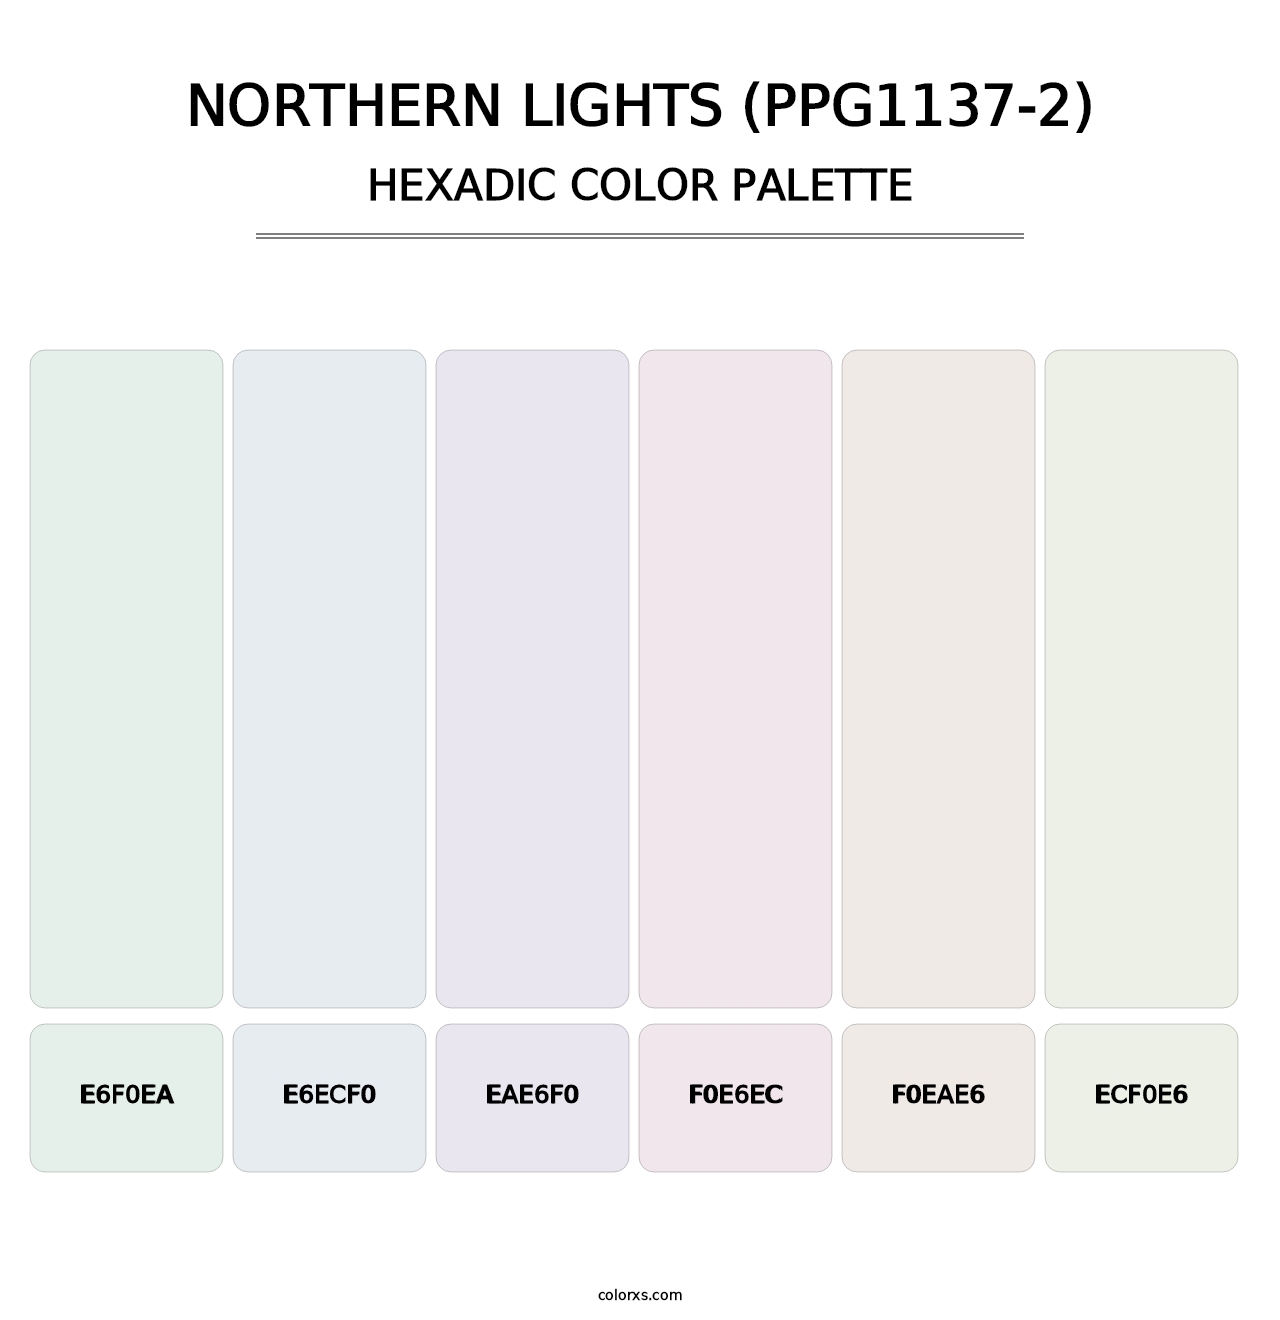 Northern Lights (PPG1137-2) - Hexadic Color Palette